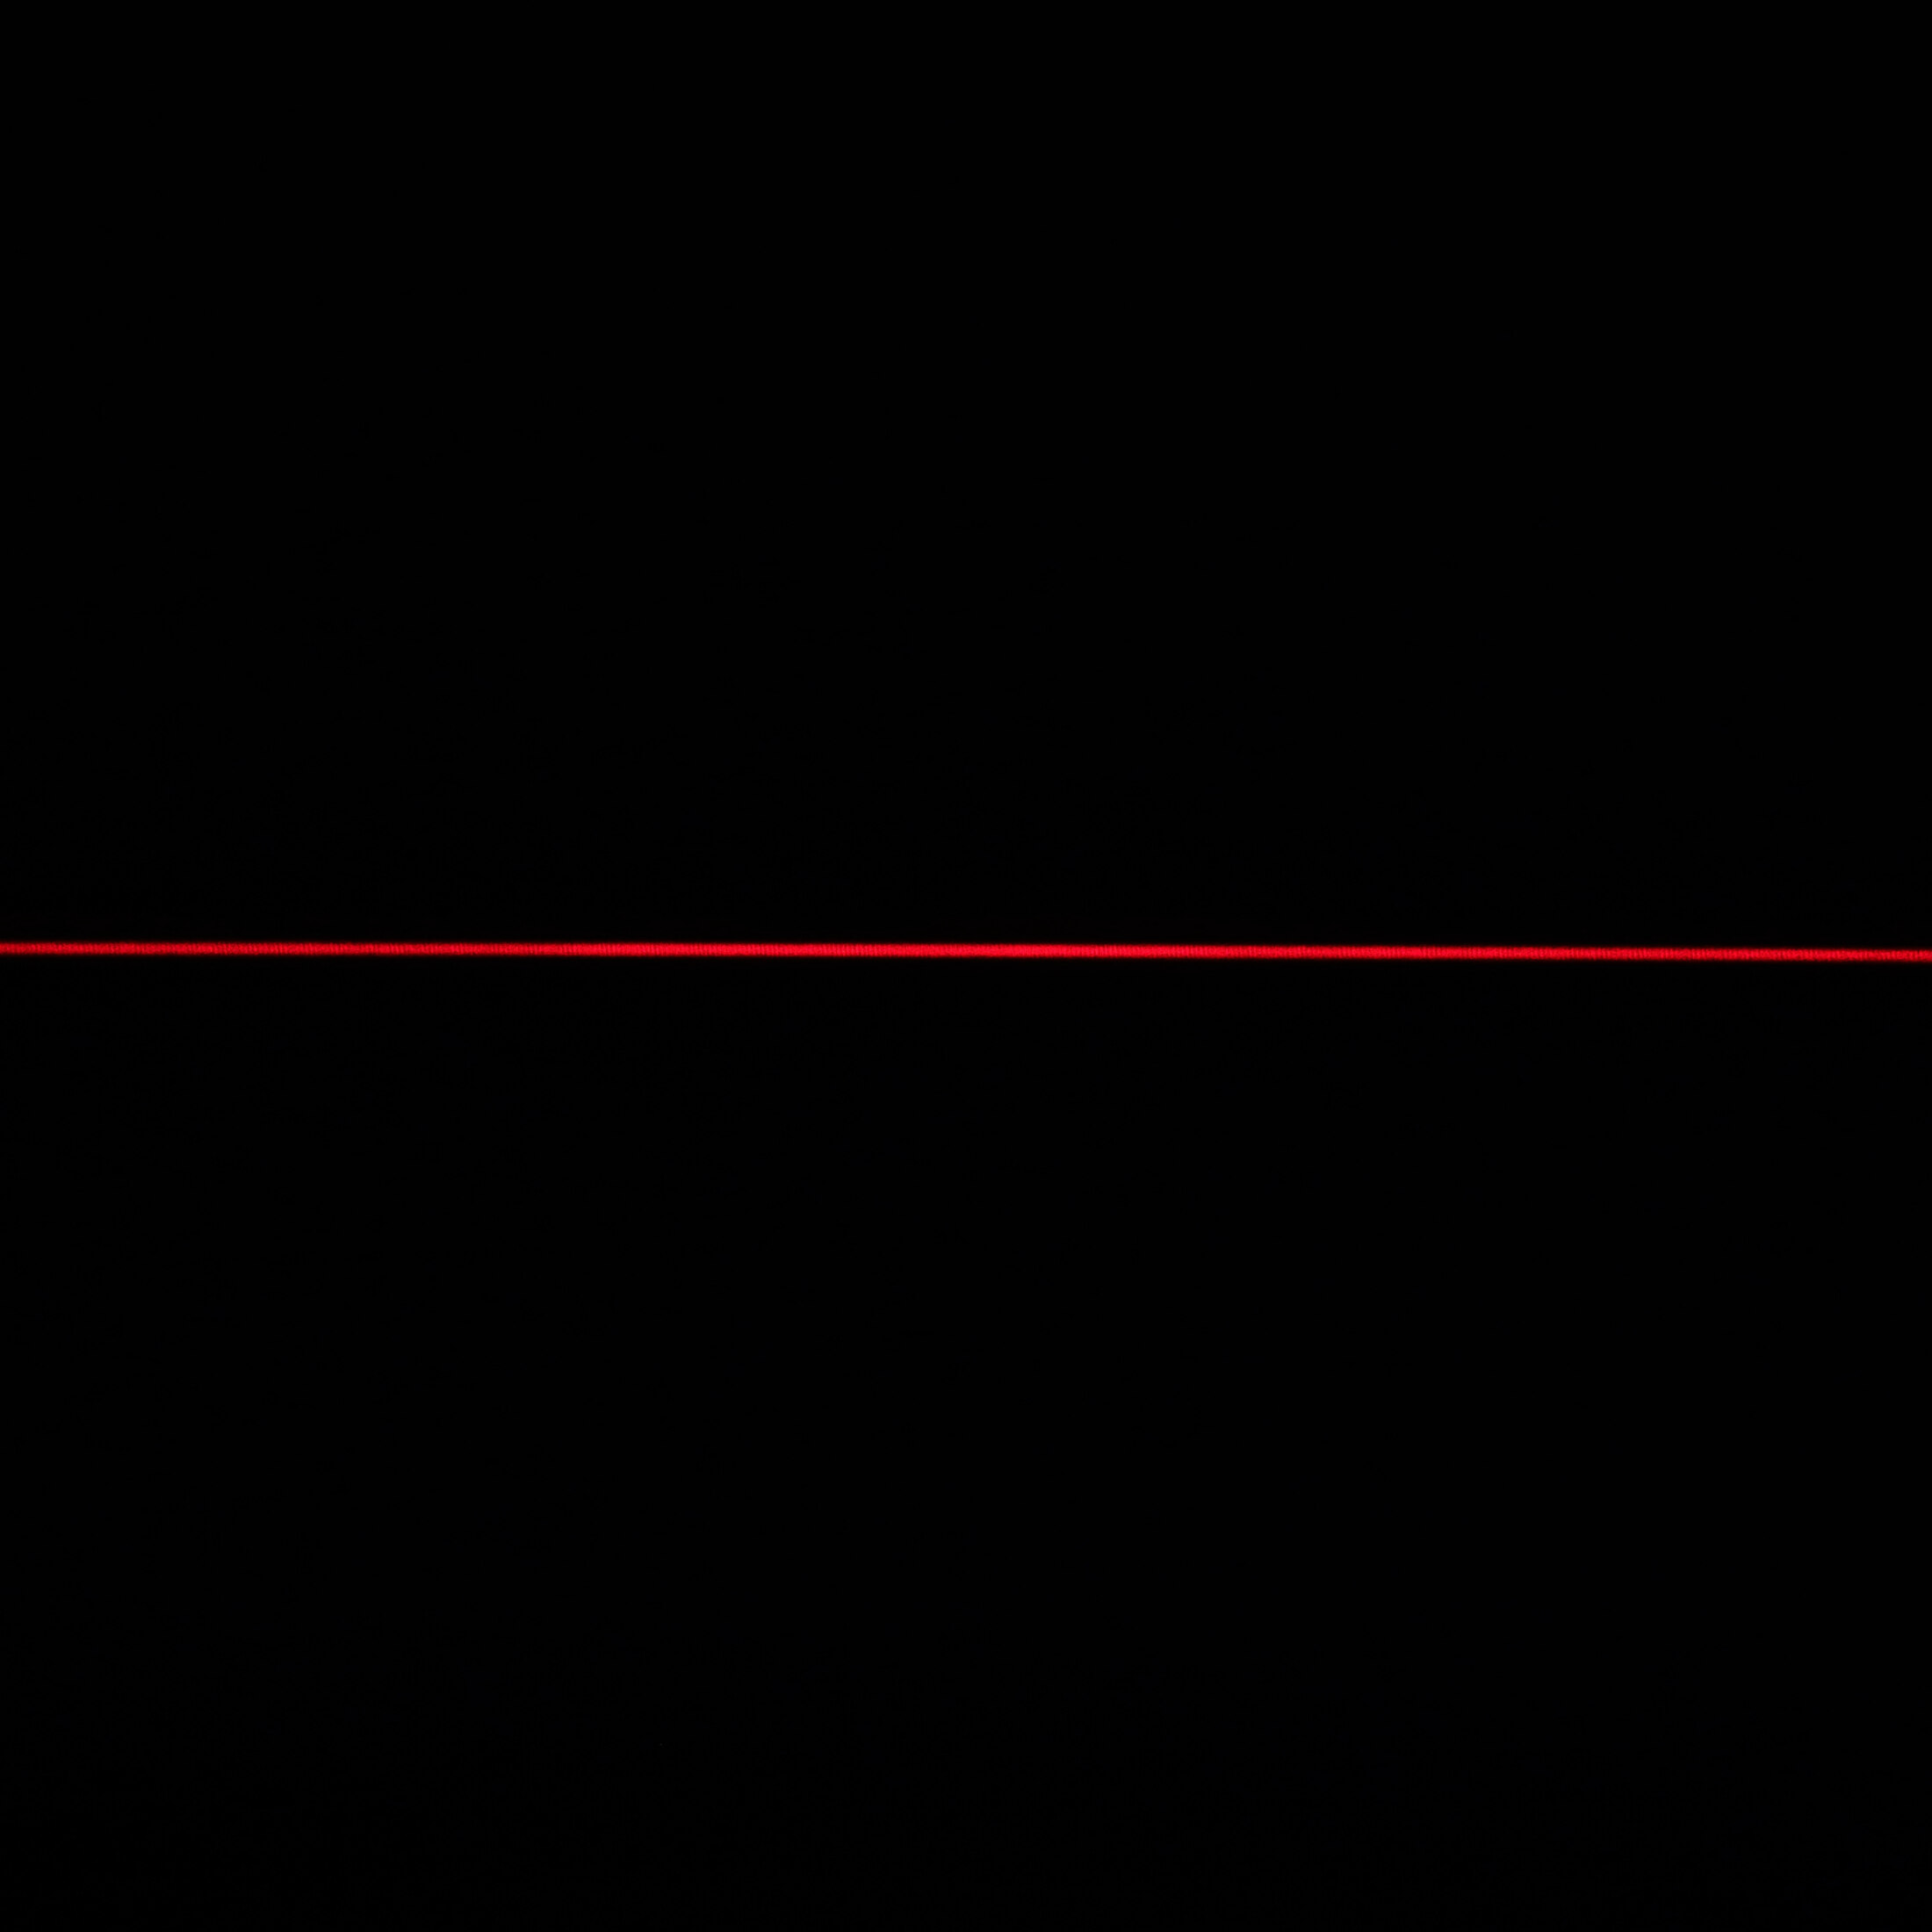 Laserfuchs linelaser, red, 635nm, 90°, 3-5V DC, Ø9x20 mm, focus 1m, class 1